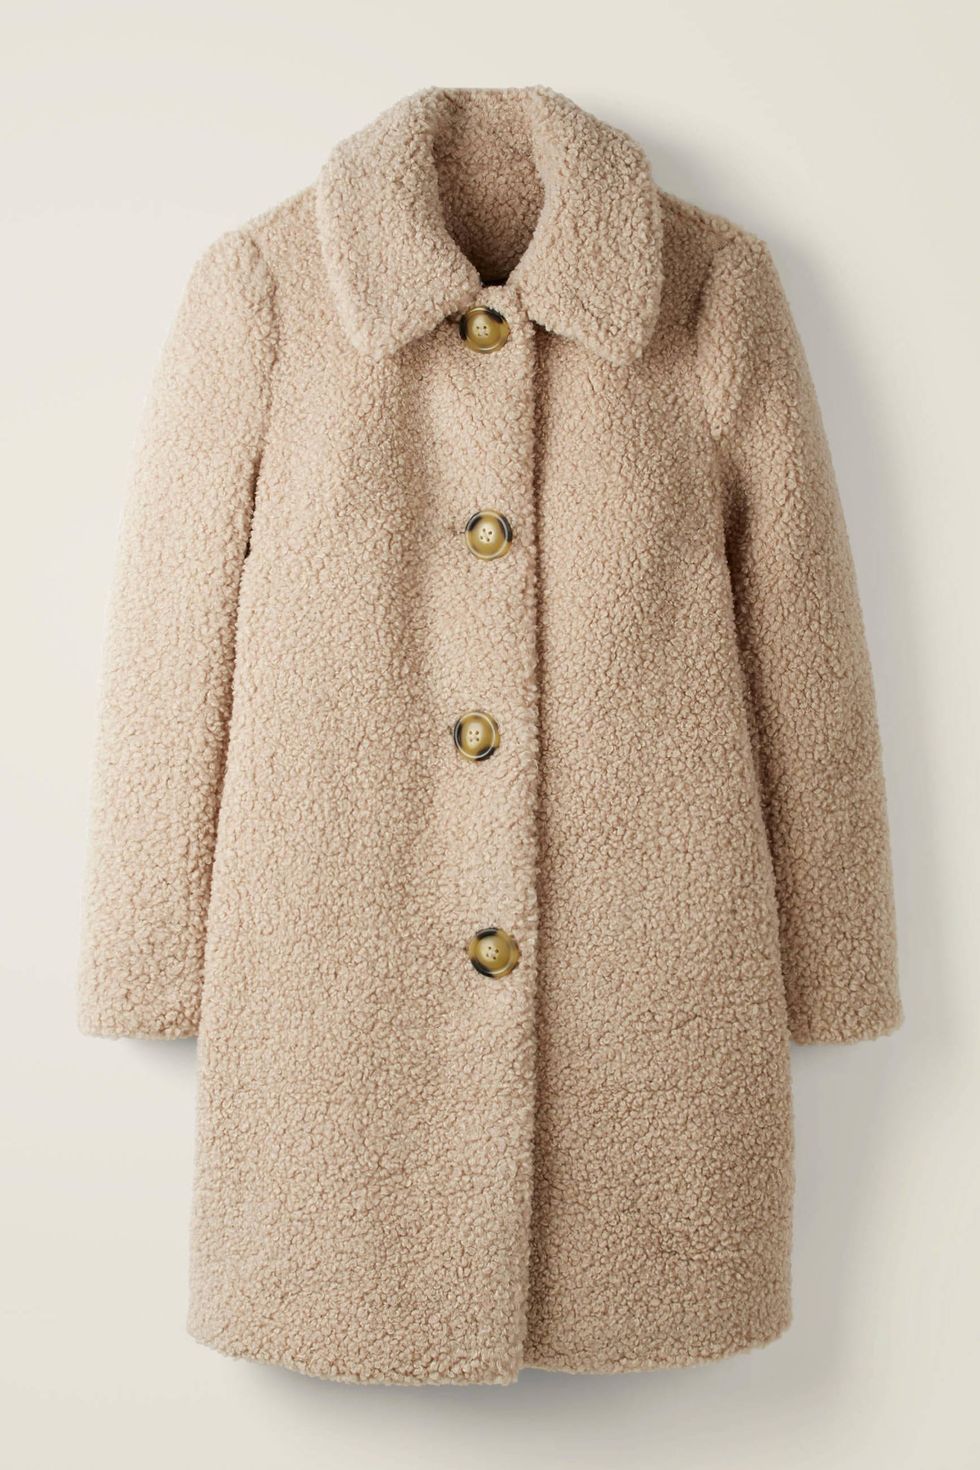 Cowell Teddy Coat, £175